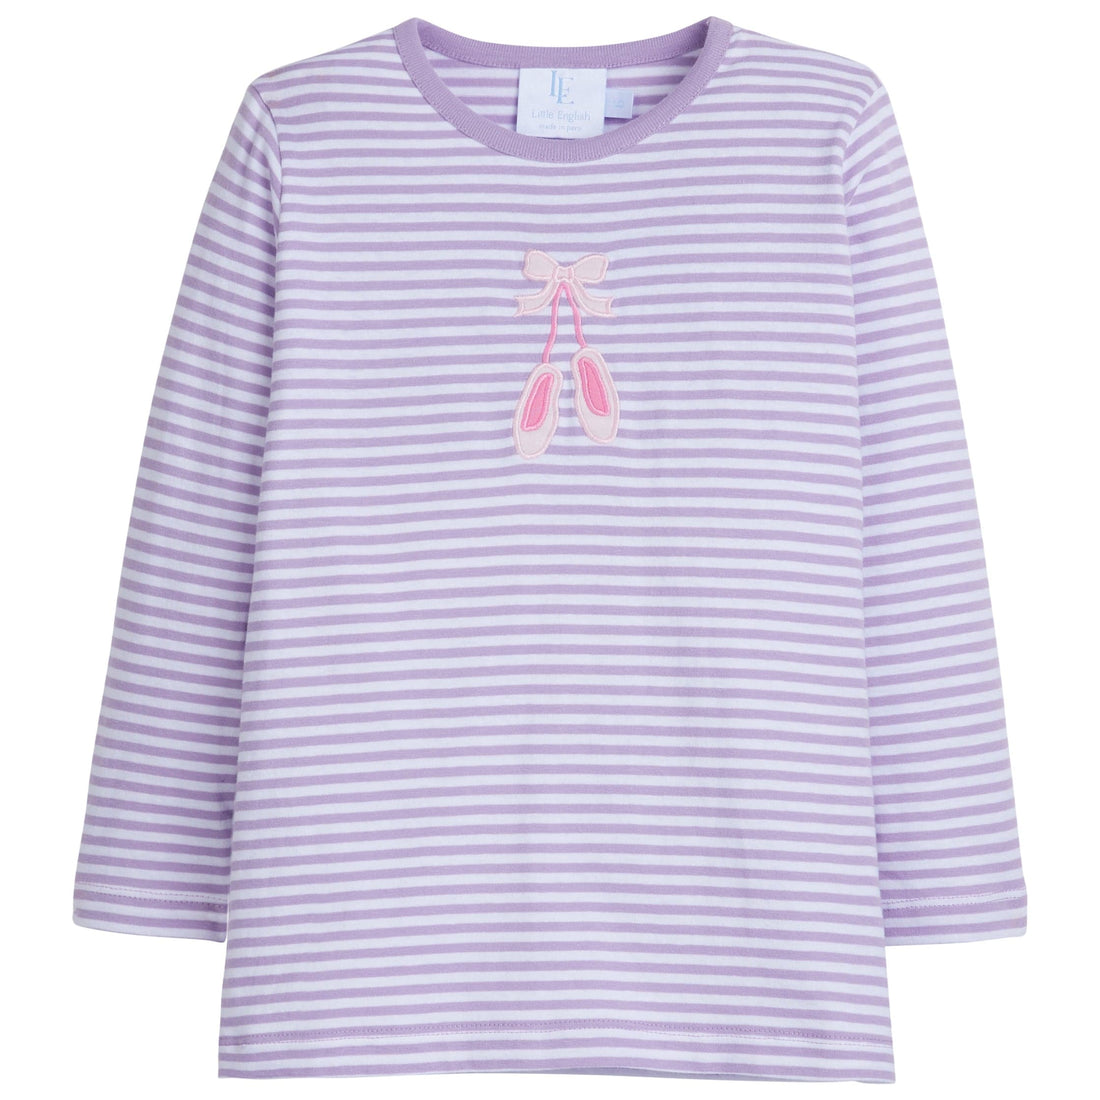 girls long sleeve purple striped t-shirt with applique ballet slipper